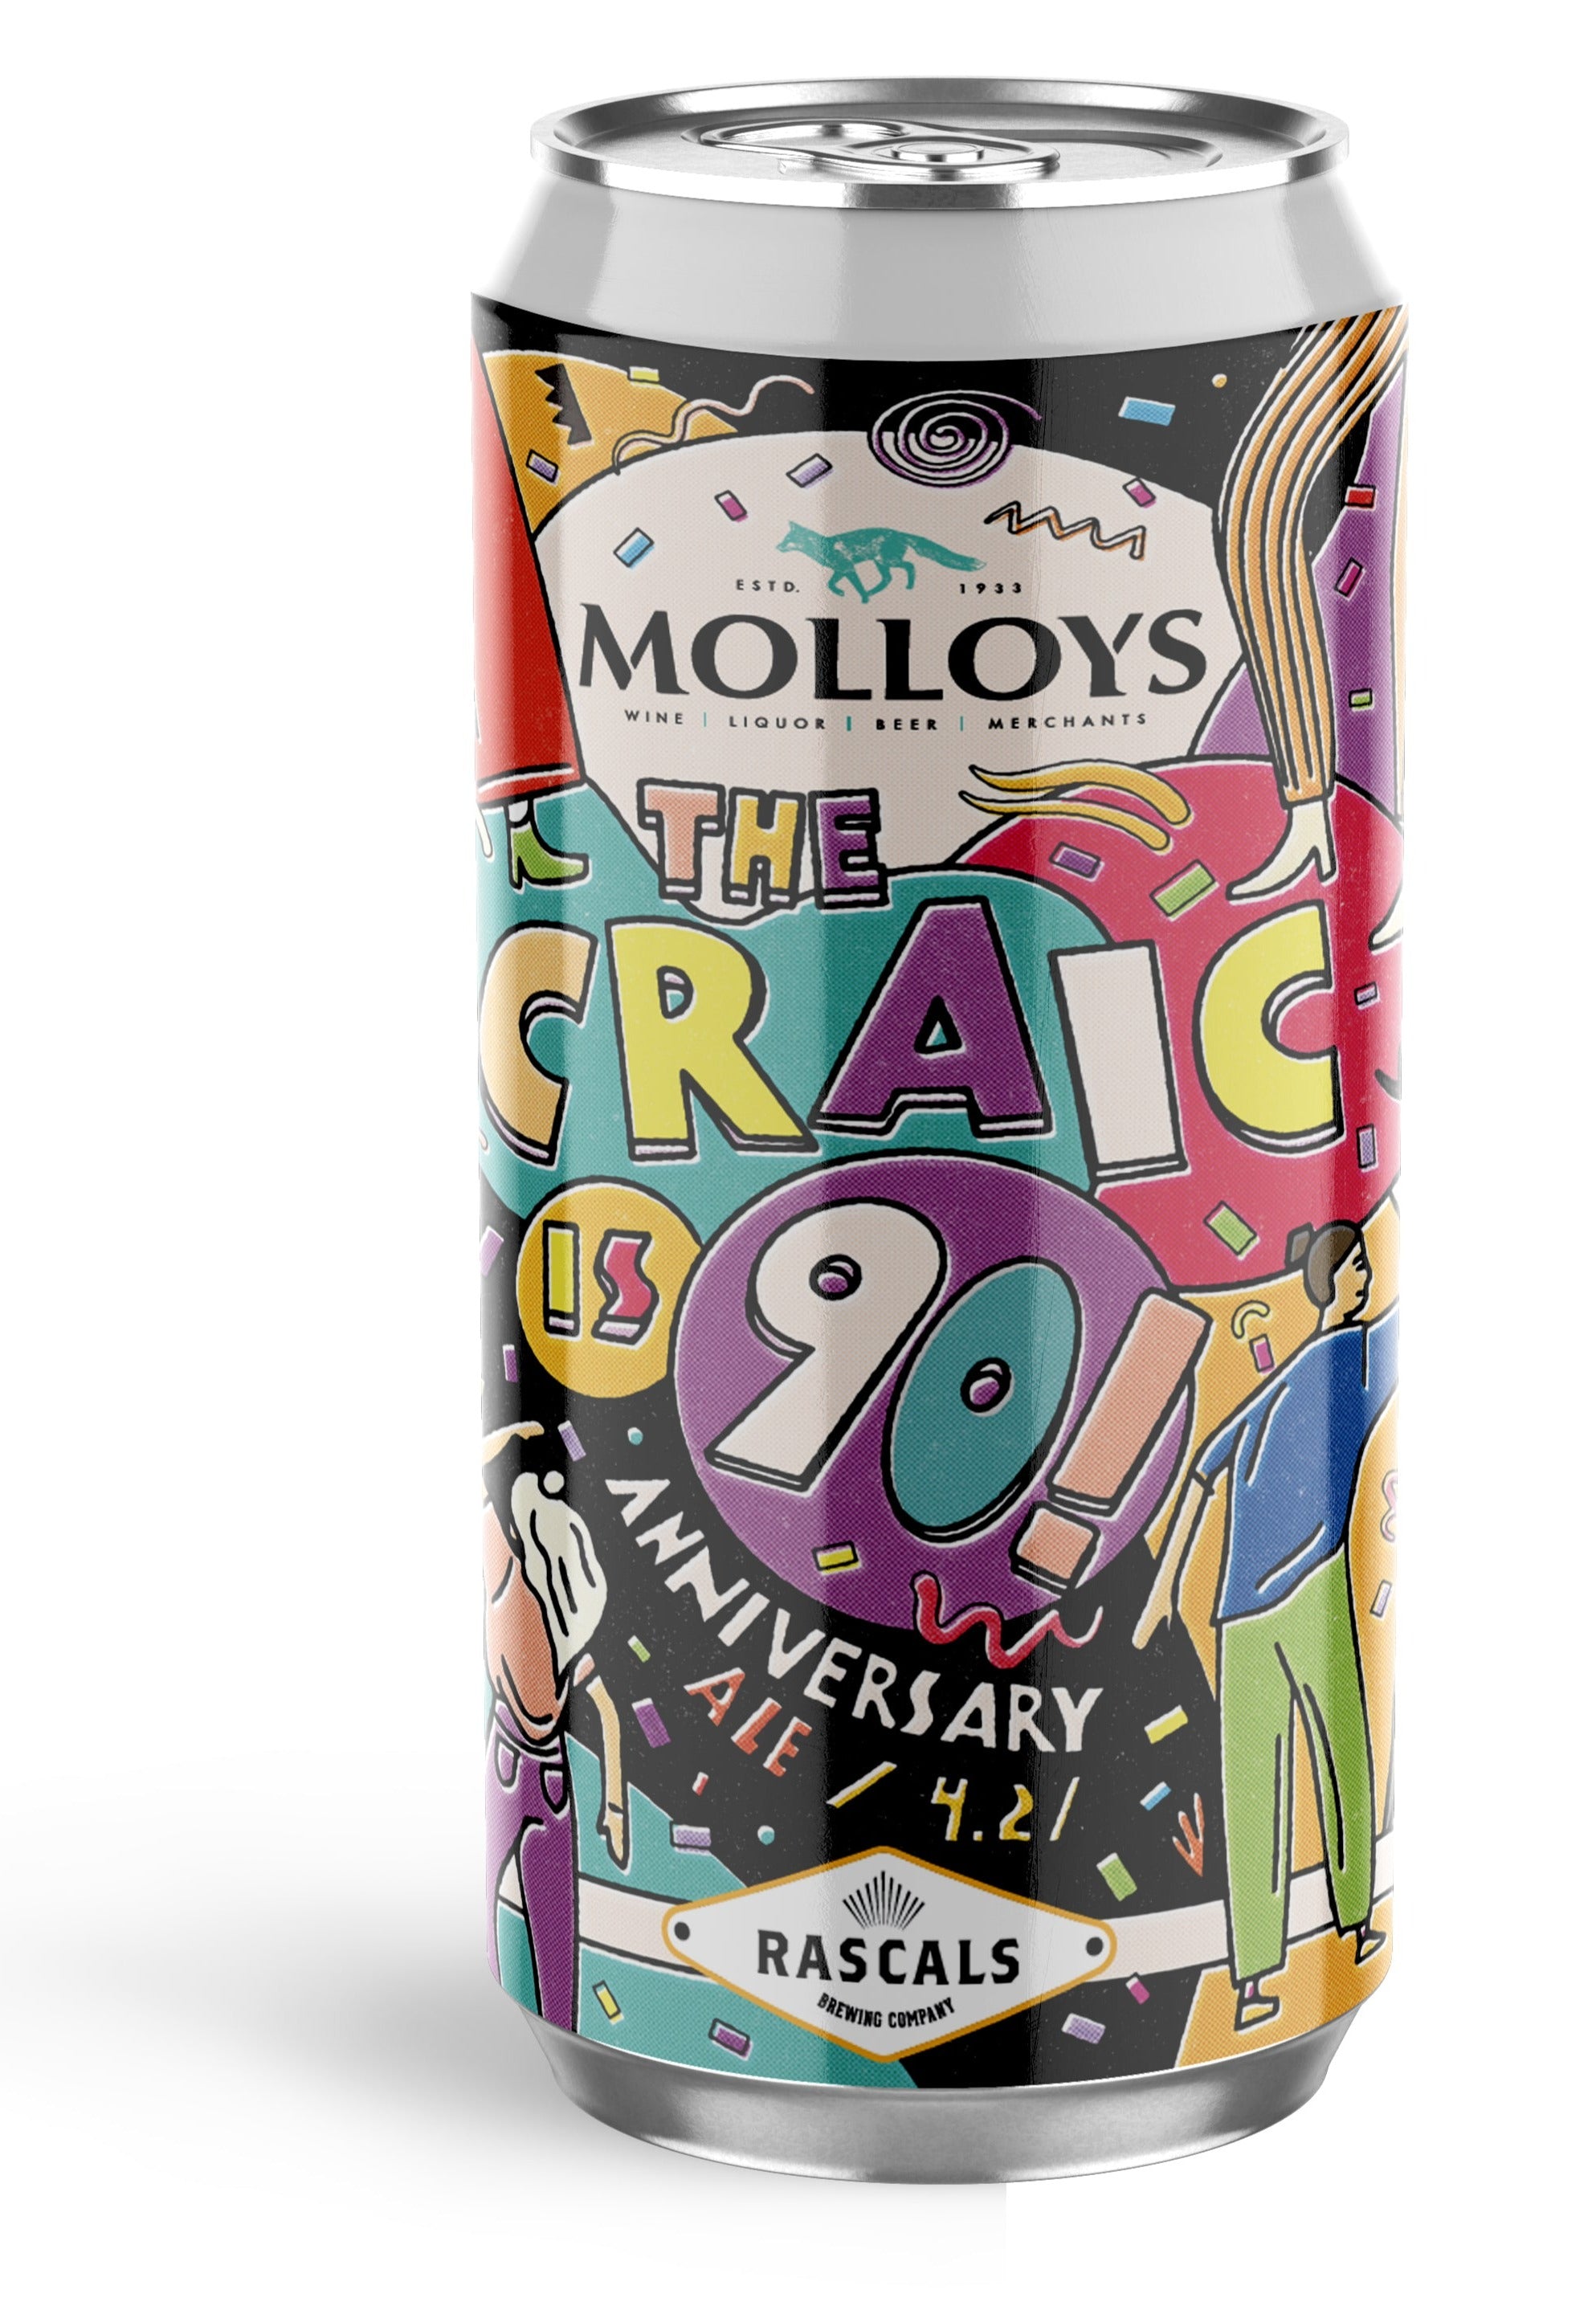 The Craic is 90! Anniversary Ale - Molloys & Rascals Collaboration